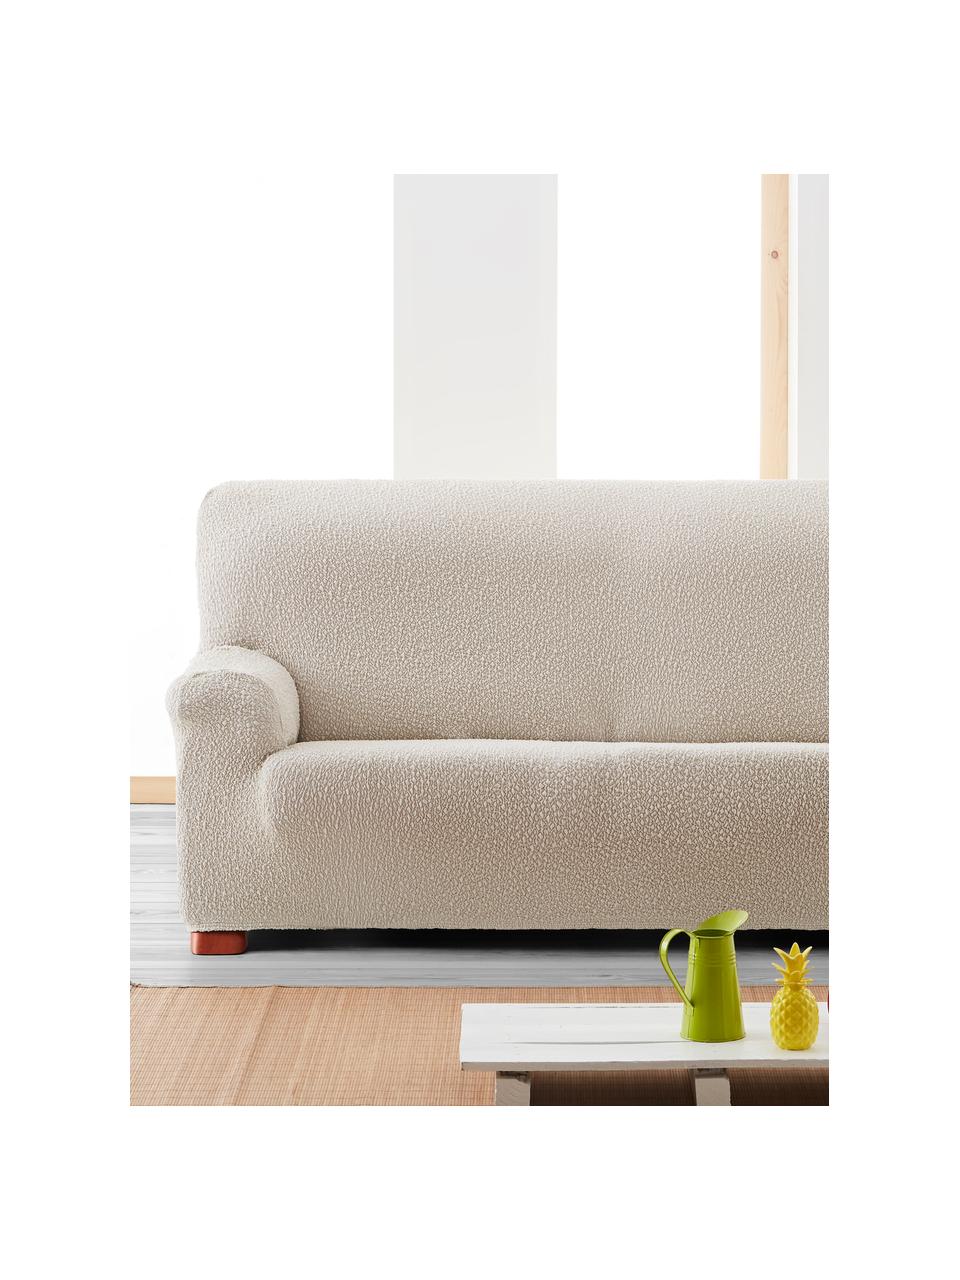 Copertura divano Roc, 55% poliestere, 35% cotone, 10% elastomero, Color crema, Larg. 260 x Alt. 120 cm